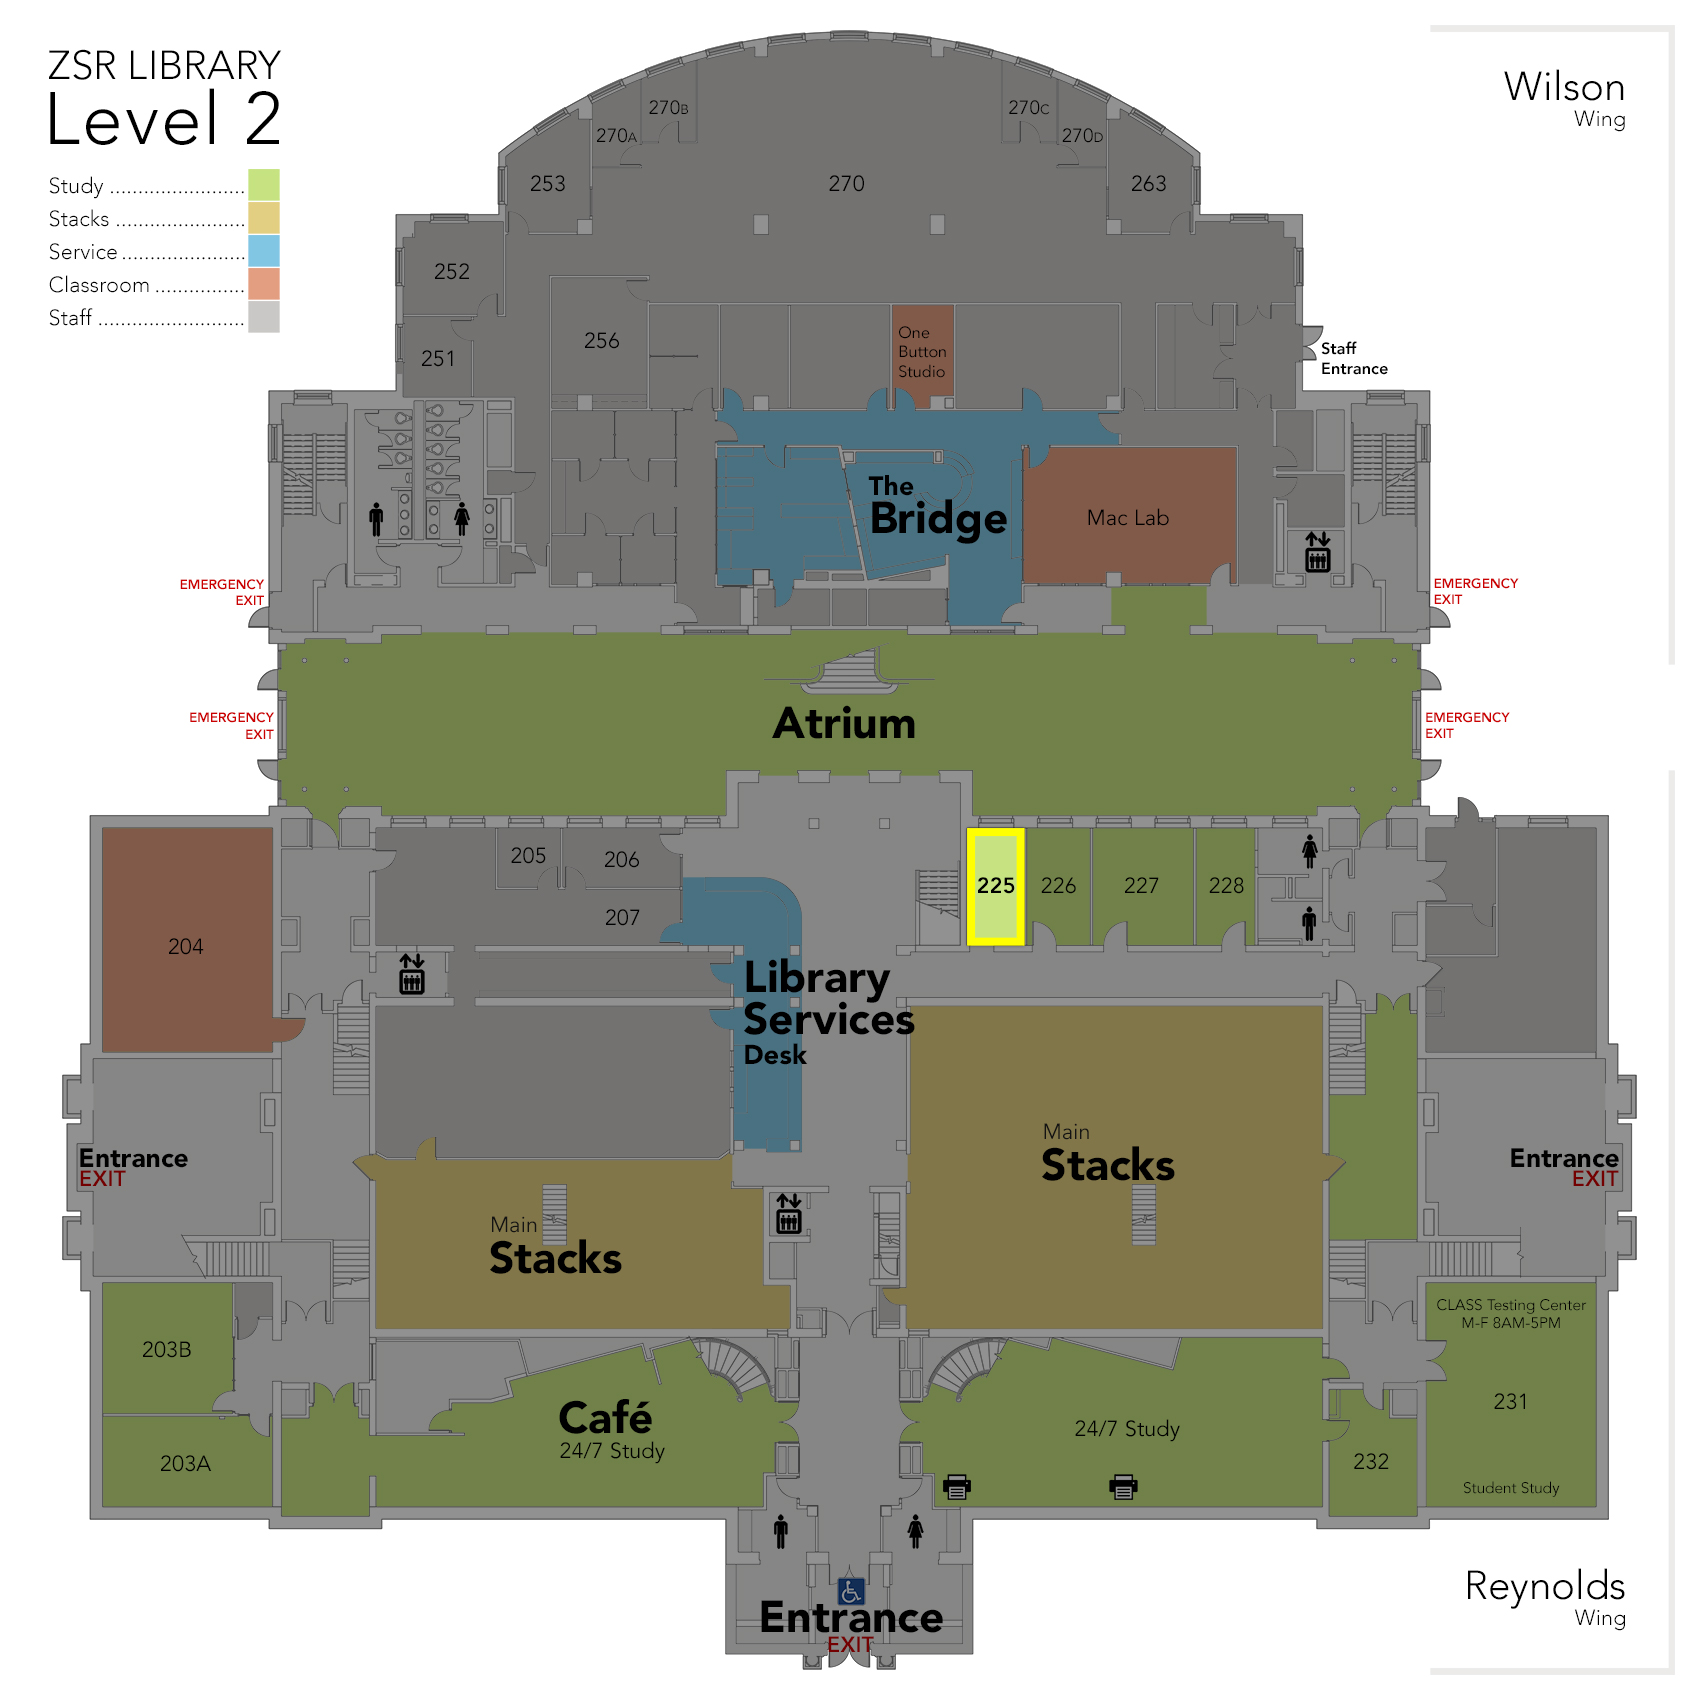 Level 2 Study Room 225 map